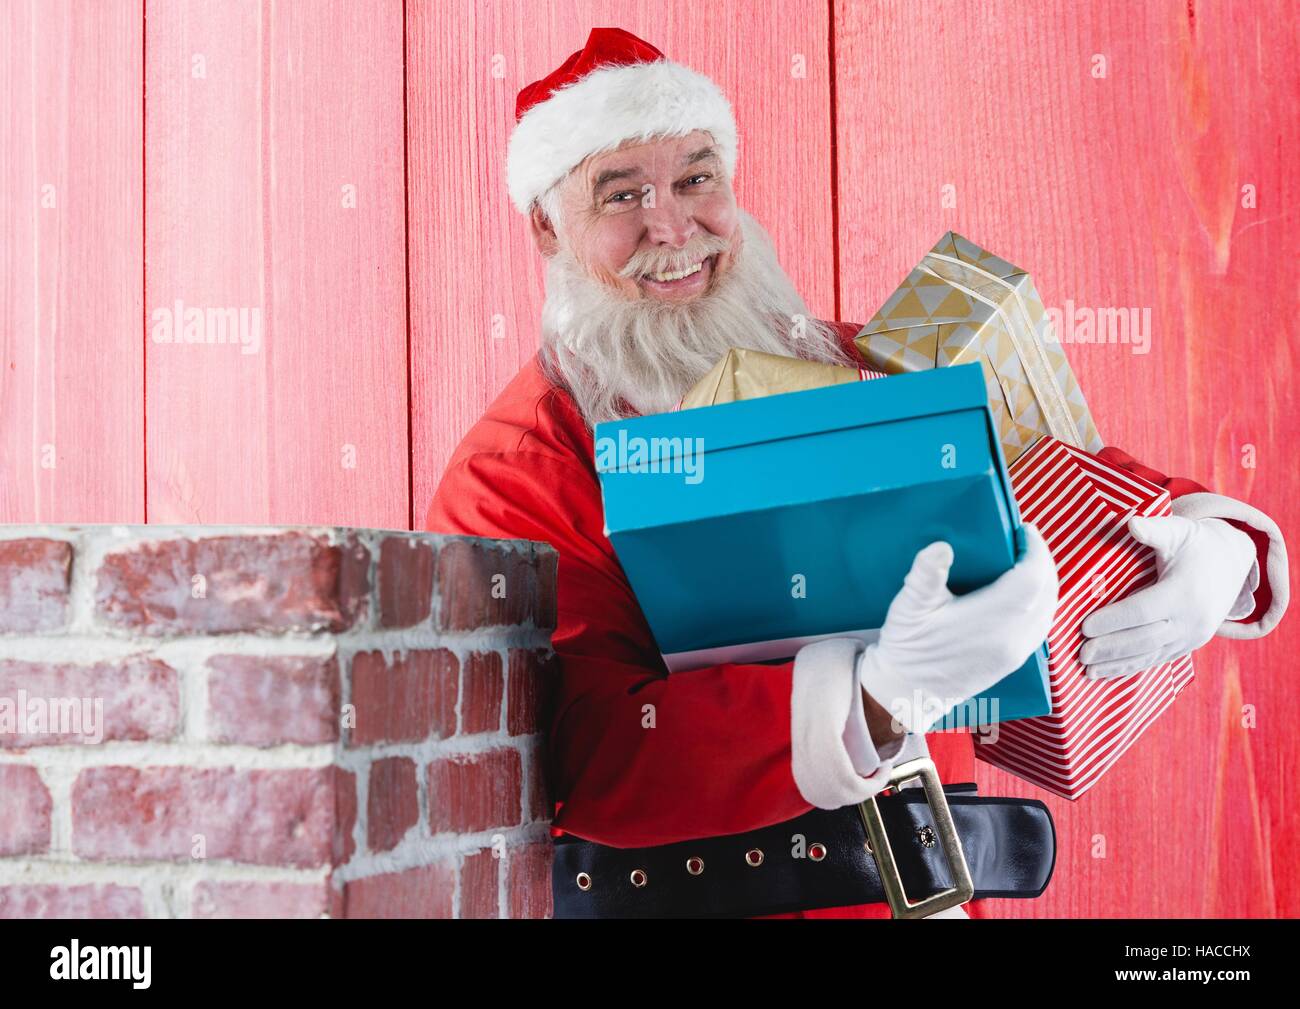 Smiling santa claus holding gift boxes Stock Photo